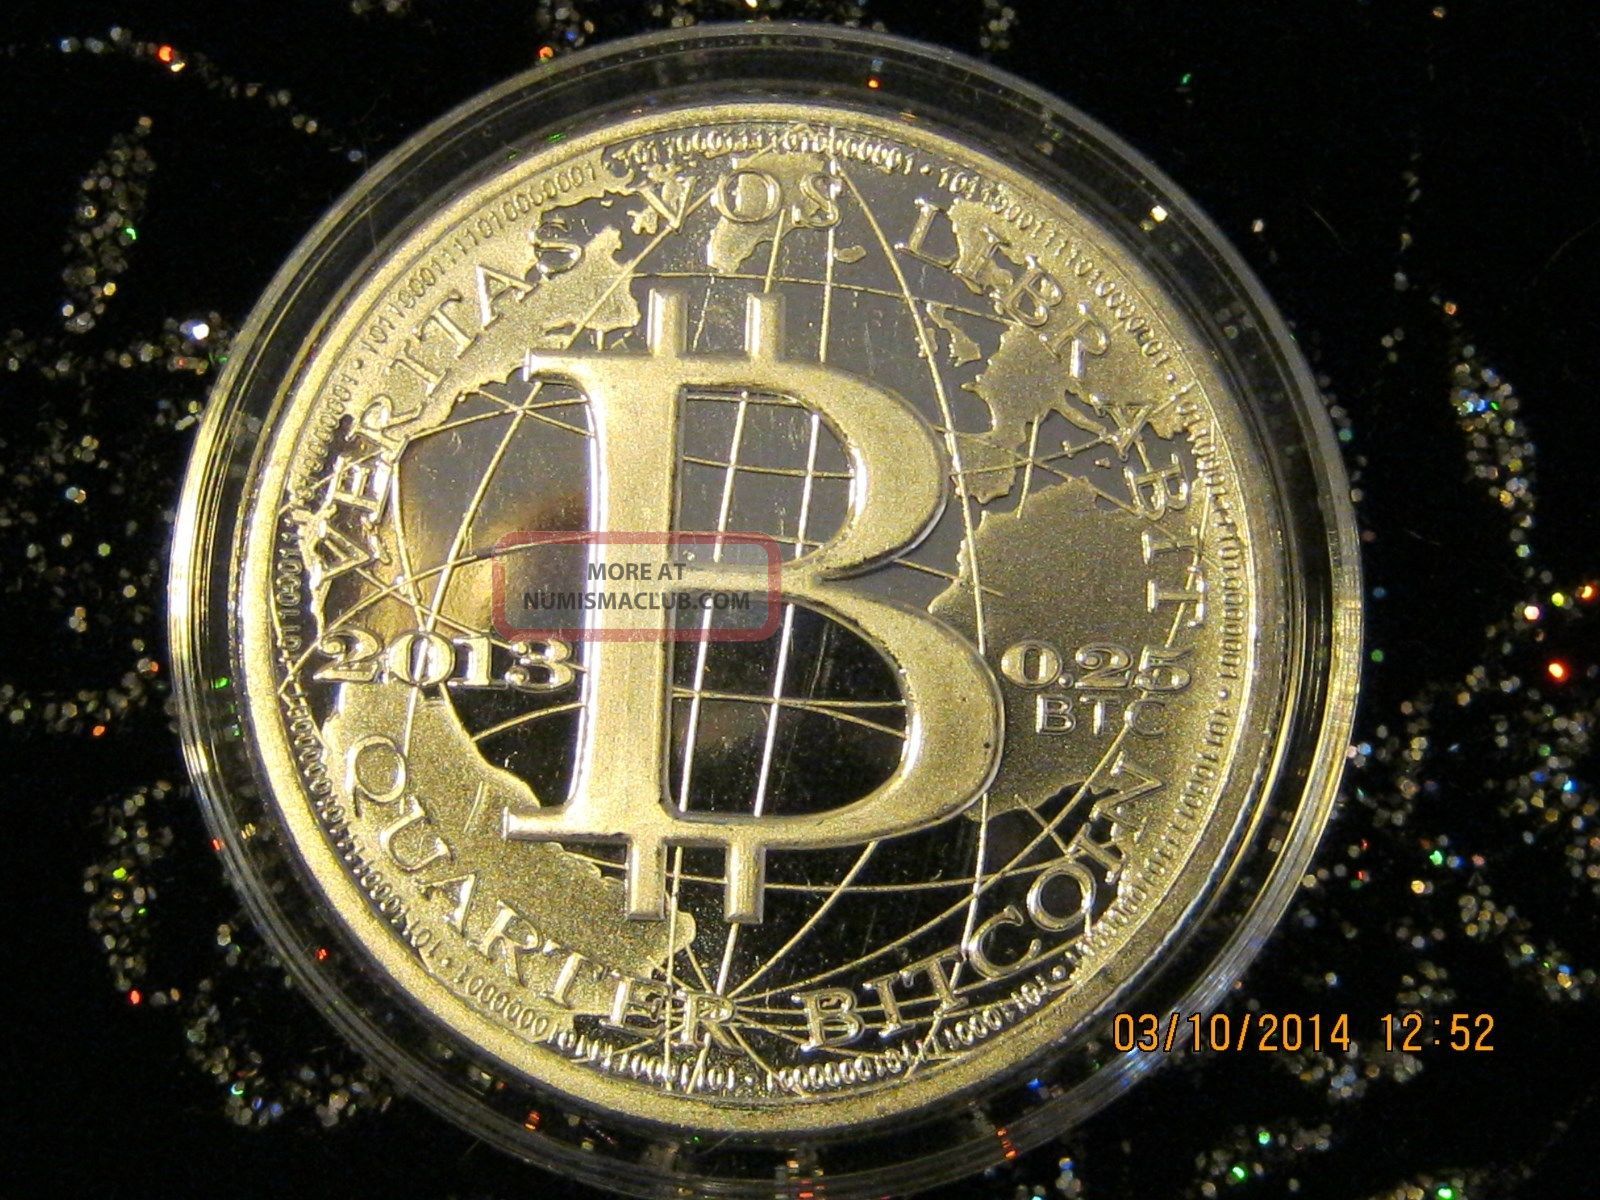 25 november 2013 bitcoin